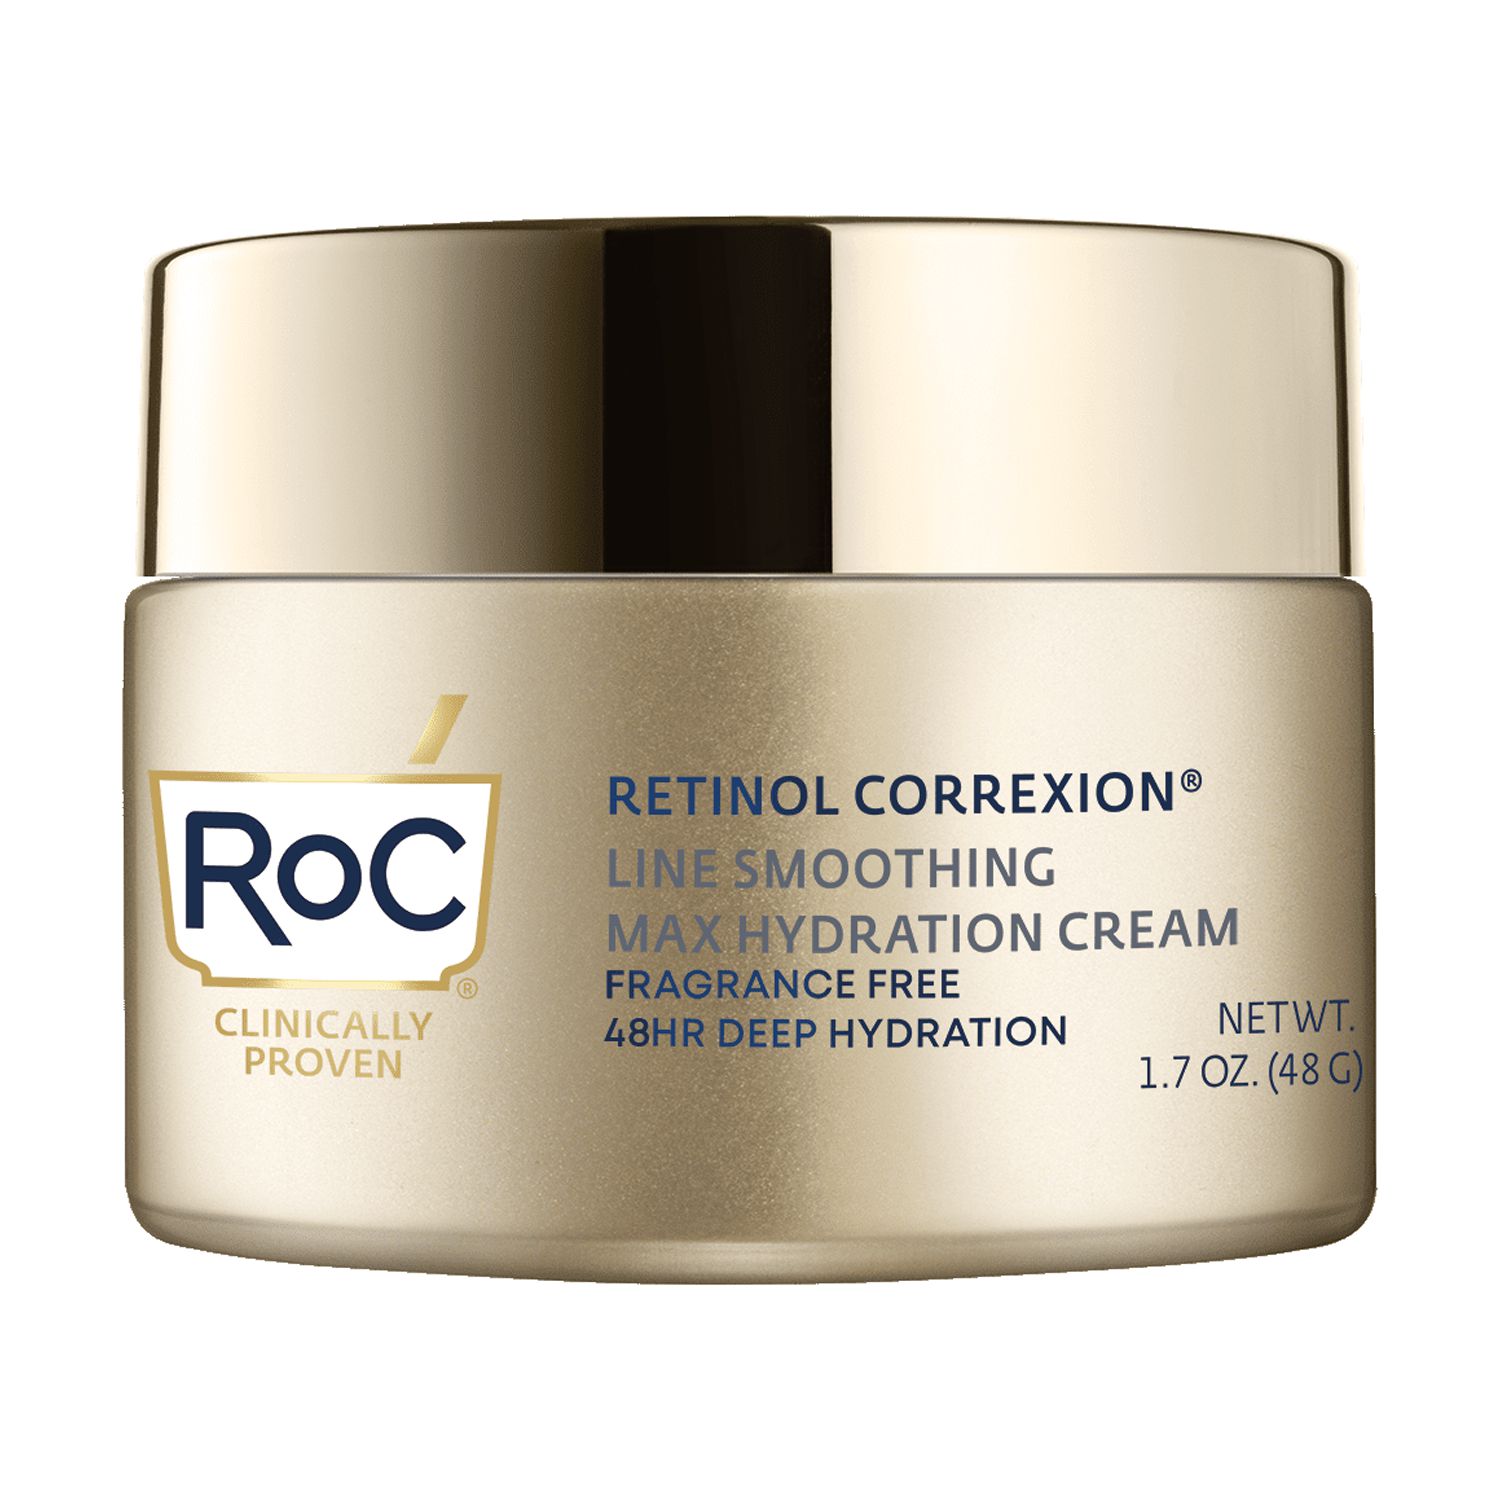 RoC Retinol Correxion Anti-Aging Daily Hydration Moisturizer Cream with Hydrating Hyaluronic Acid, Fragrance-Free, 1.7 oz - image 1 of 8